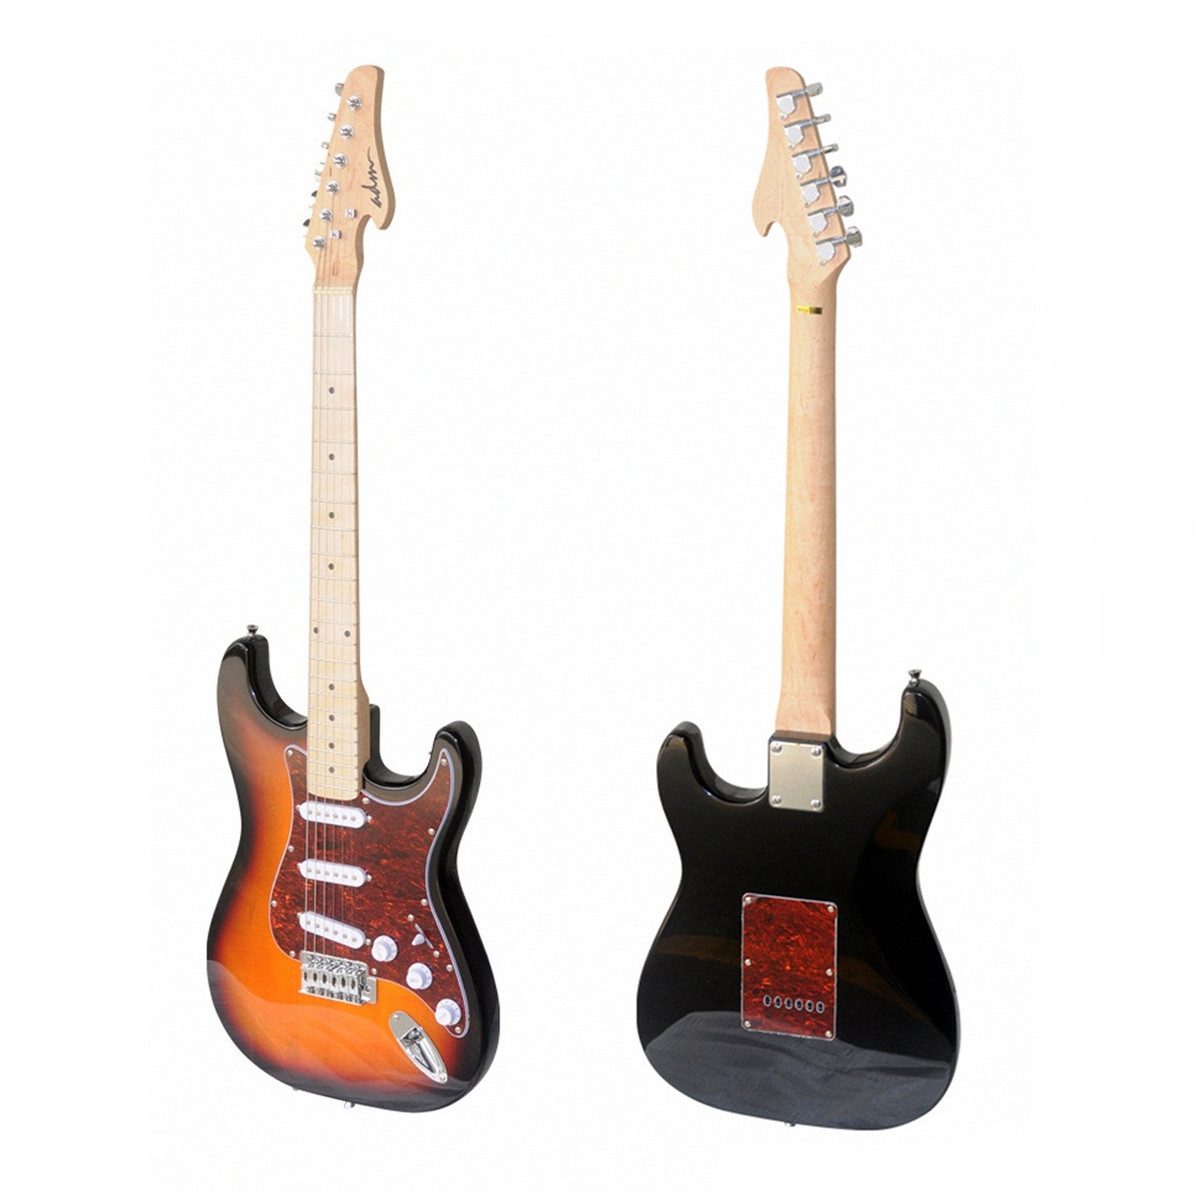 Kit de guitarra eléctrica de madera maciza adecuado para principiantes (EGS111-10S)